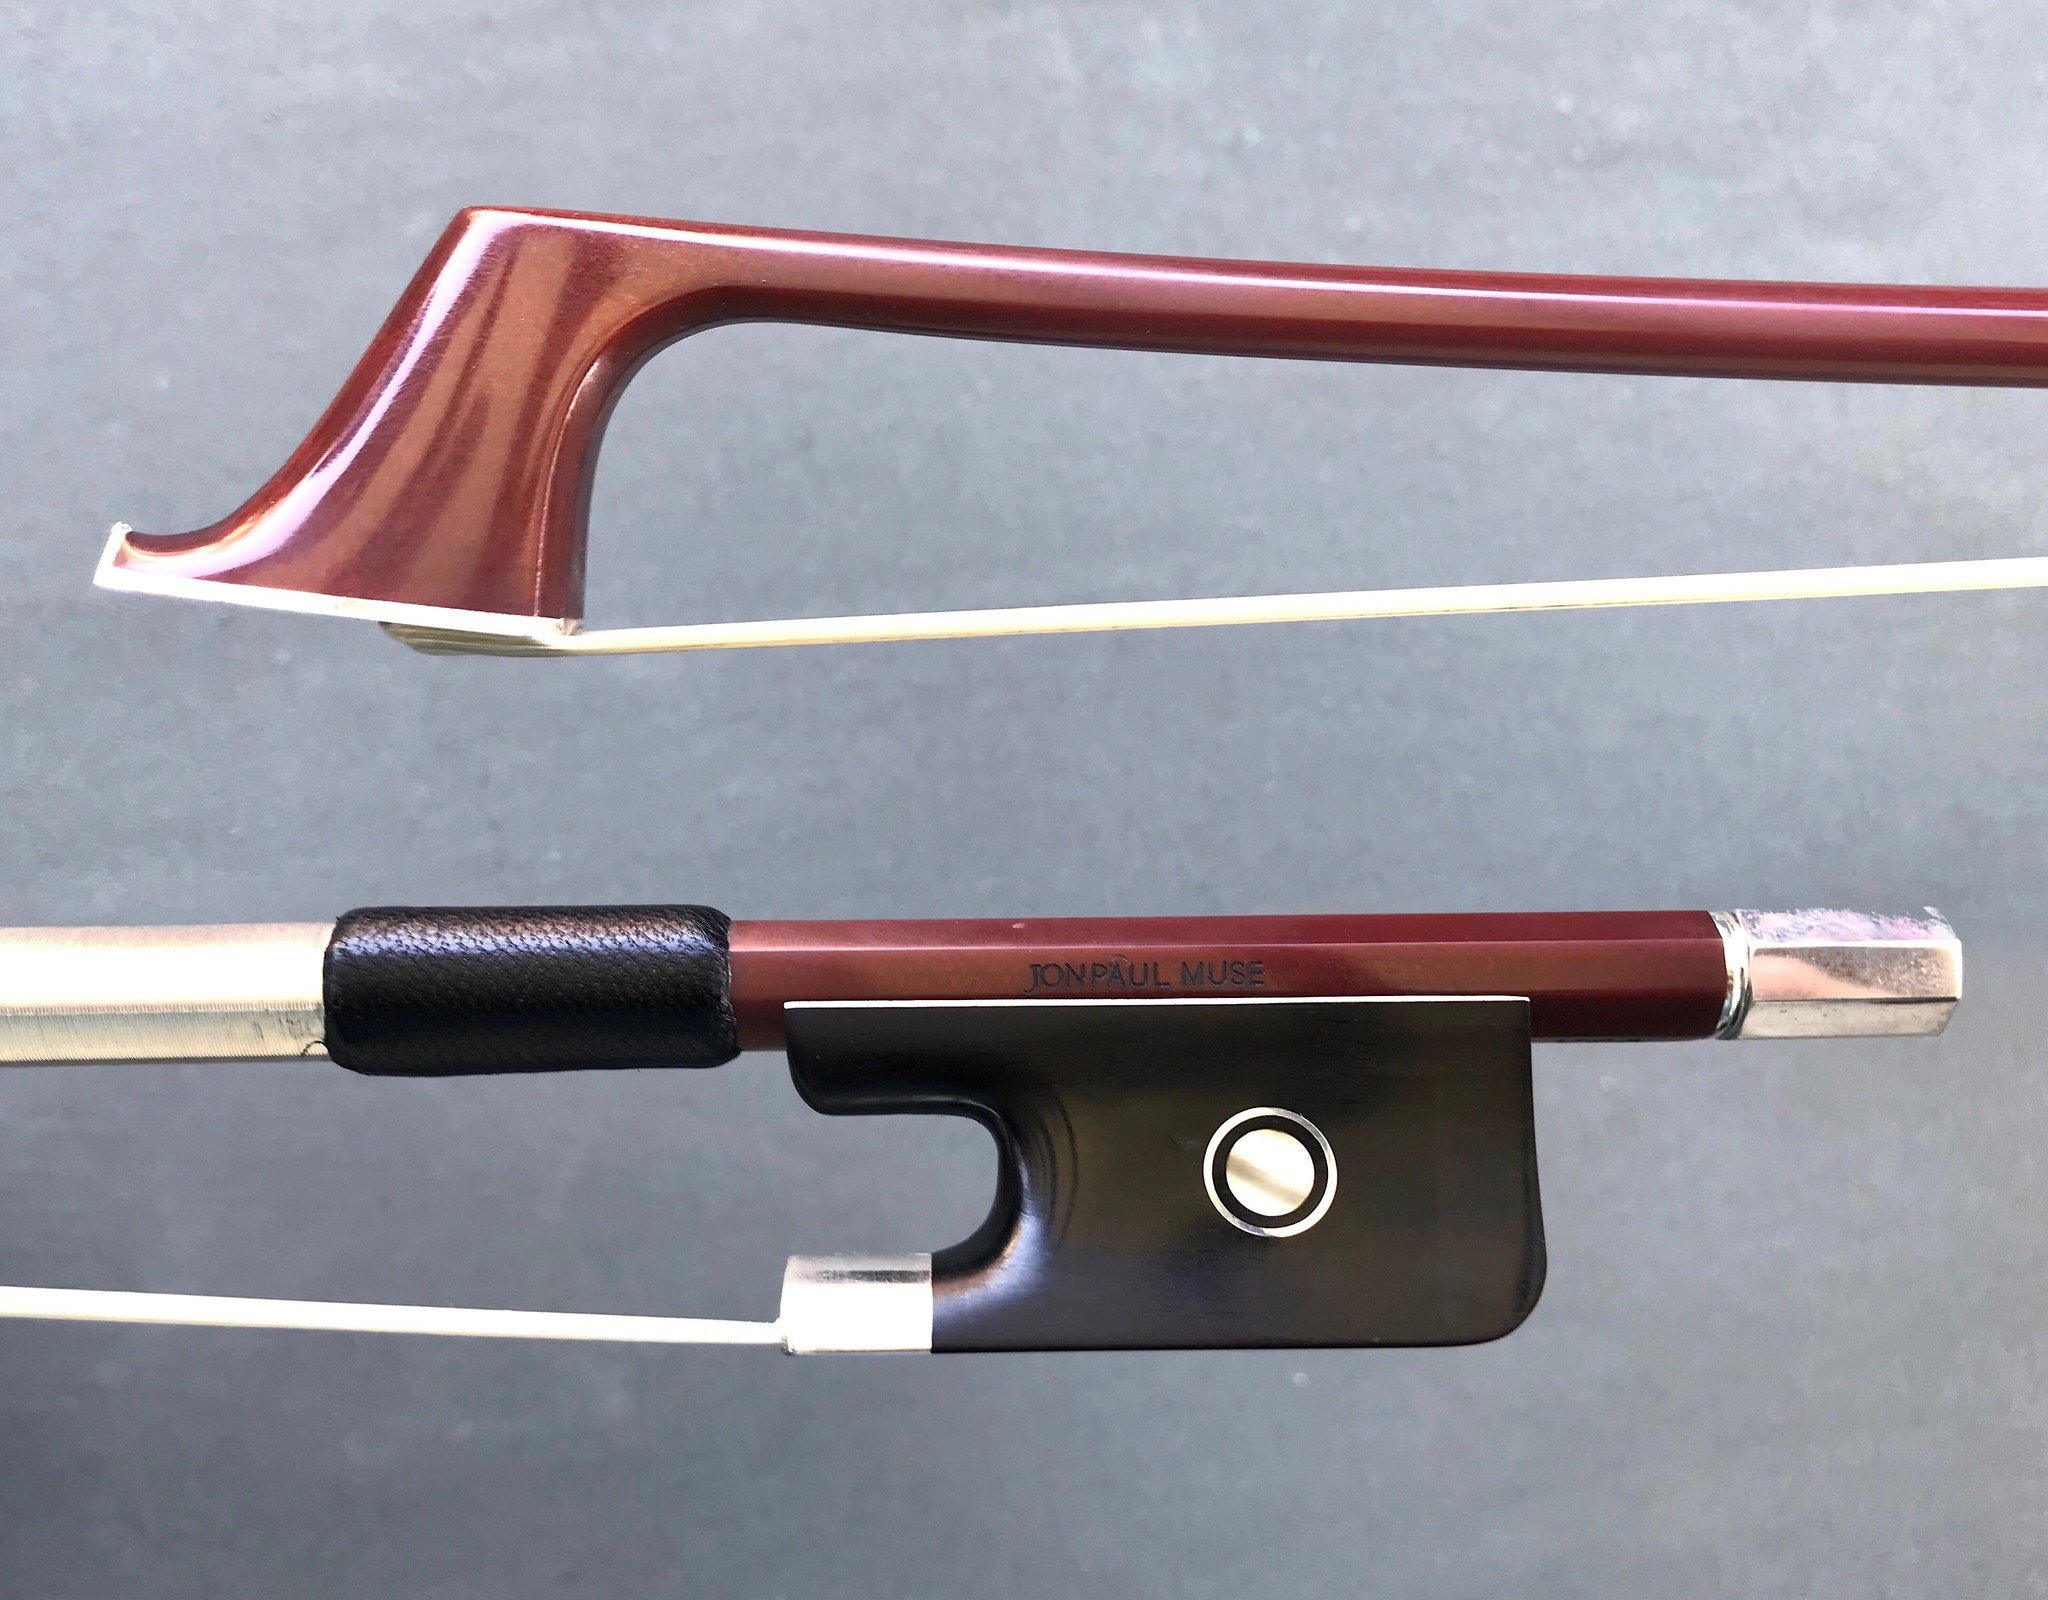 JonPaul JonPaul MUSE carbon-fiber silver cello bow with brown finish, USA